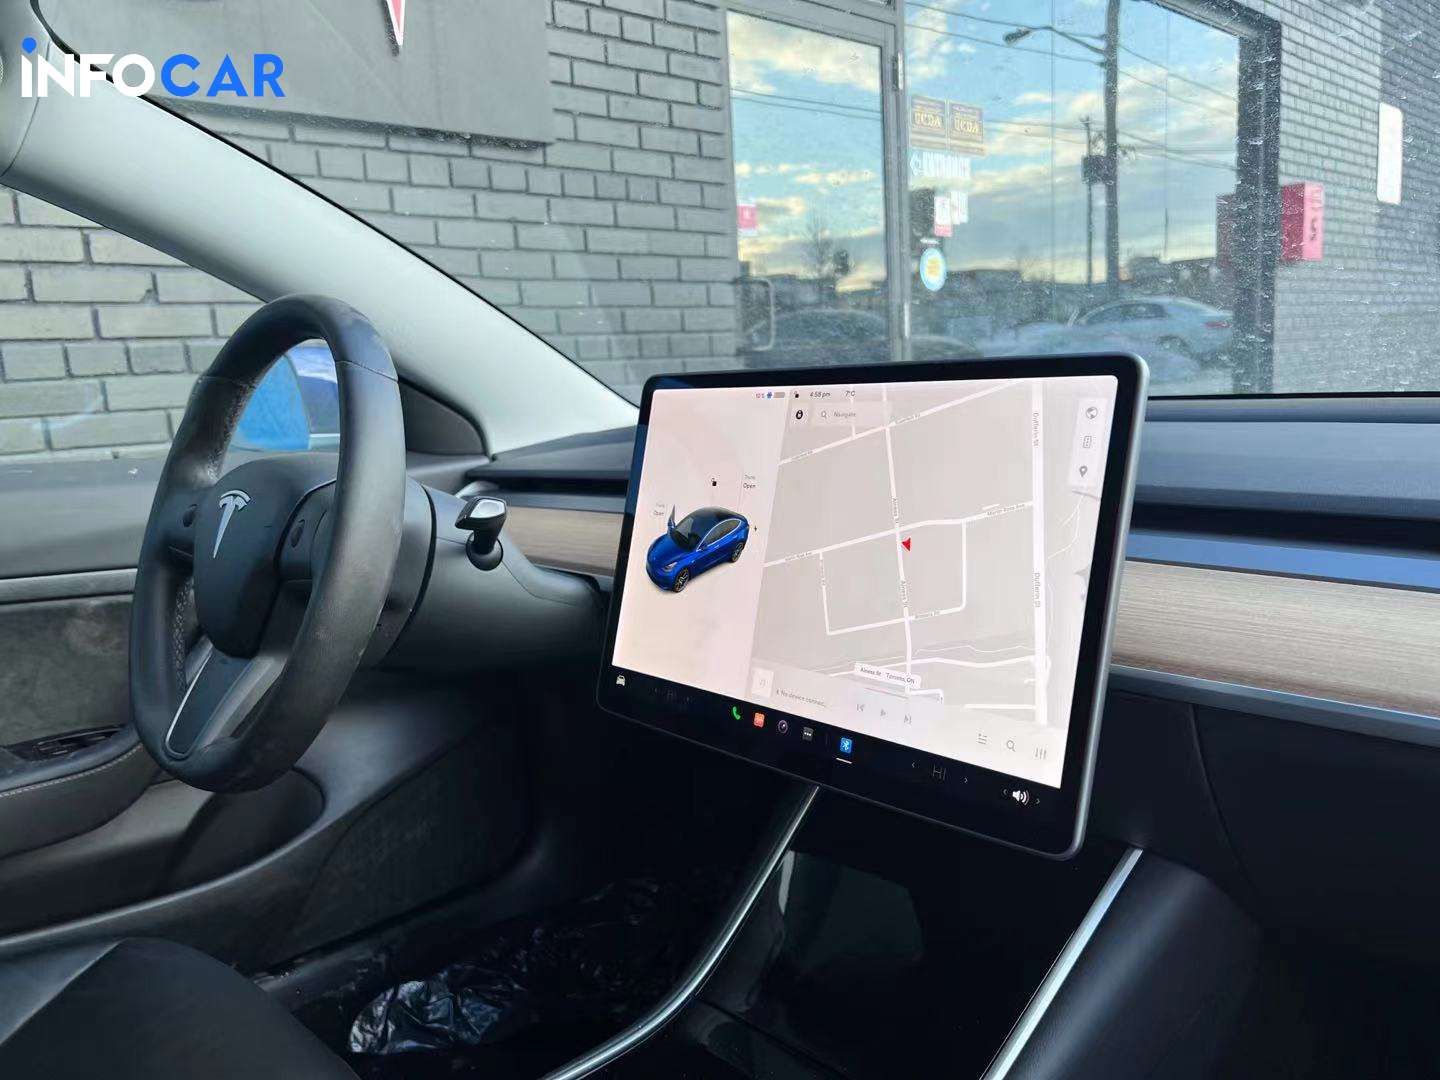 2020 Tesla Model 3 null - INFOCAR - Toronto Auto Trading Platform